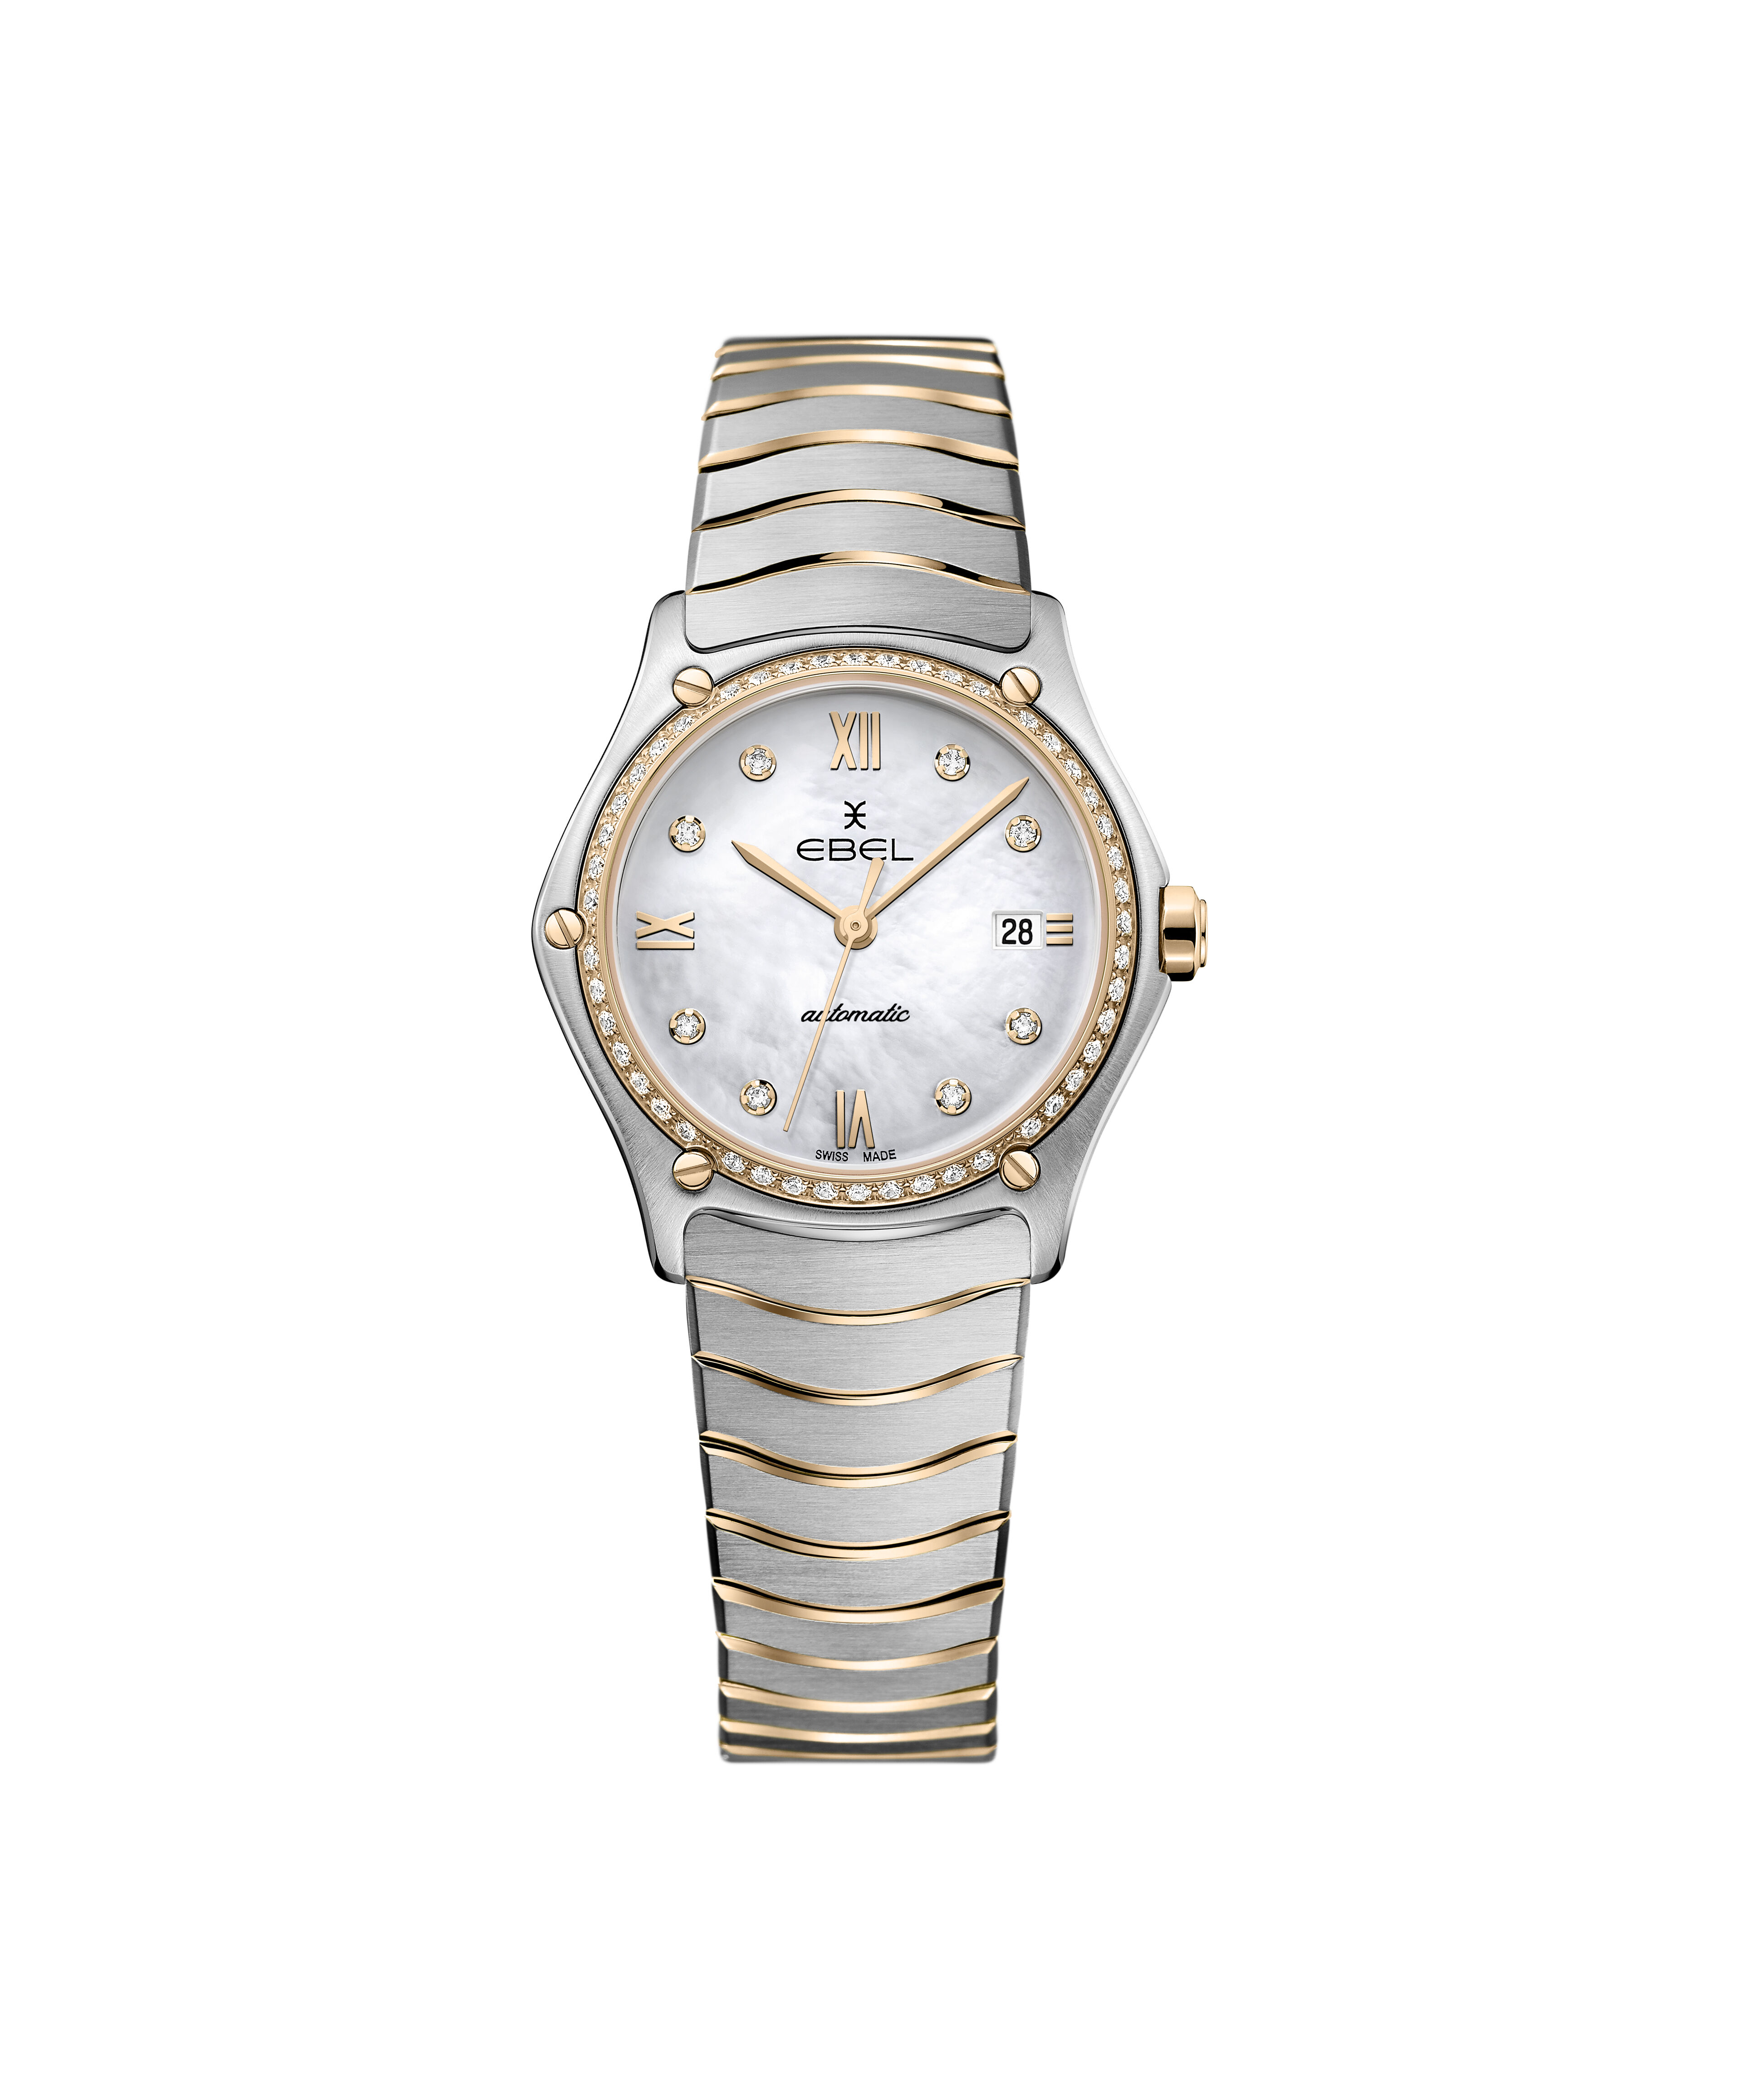 Luxury Replica Watch Information